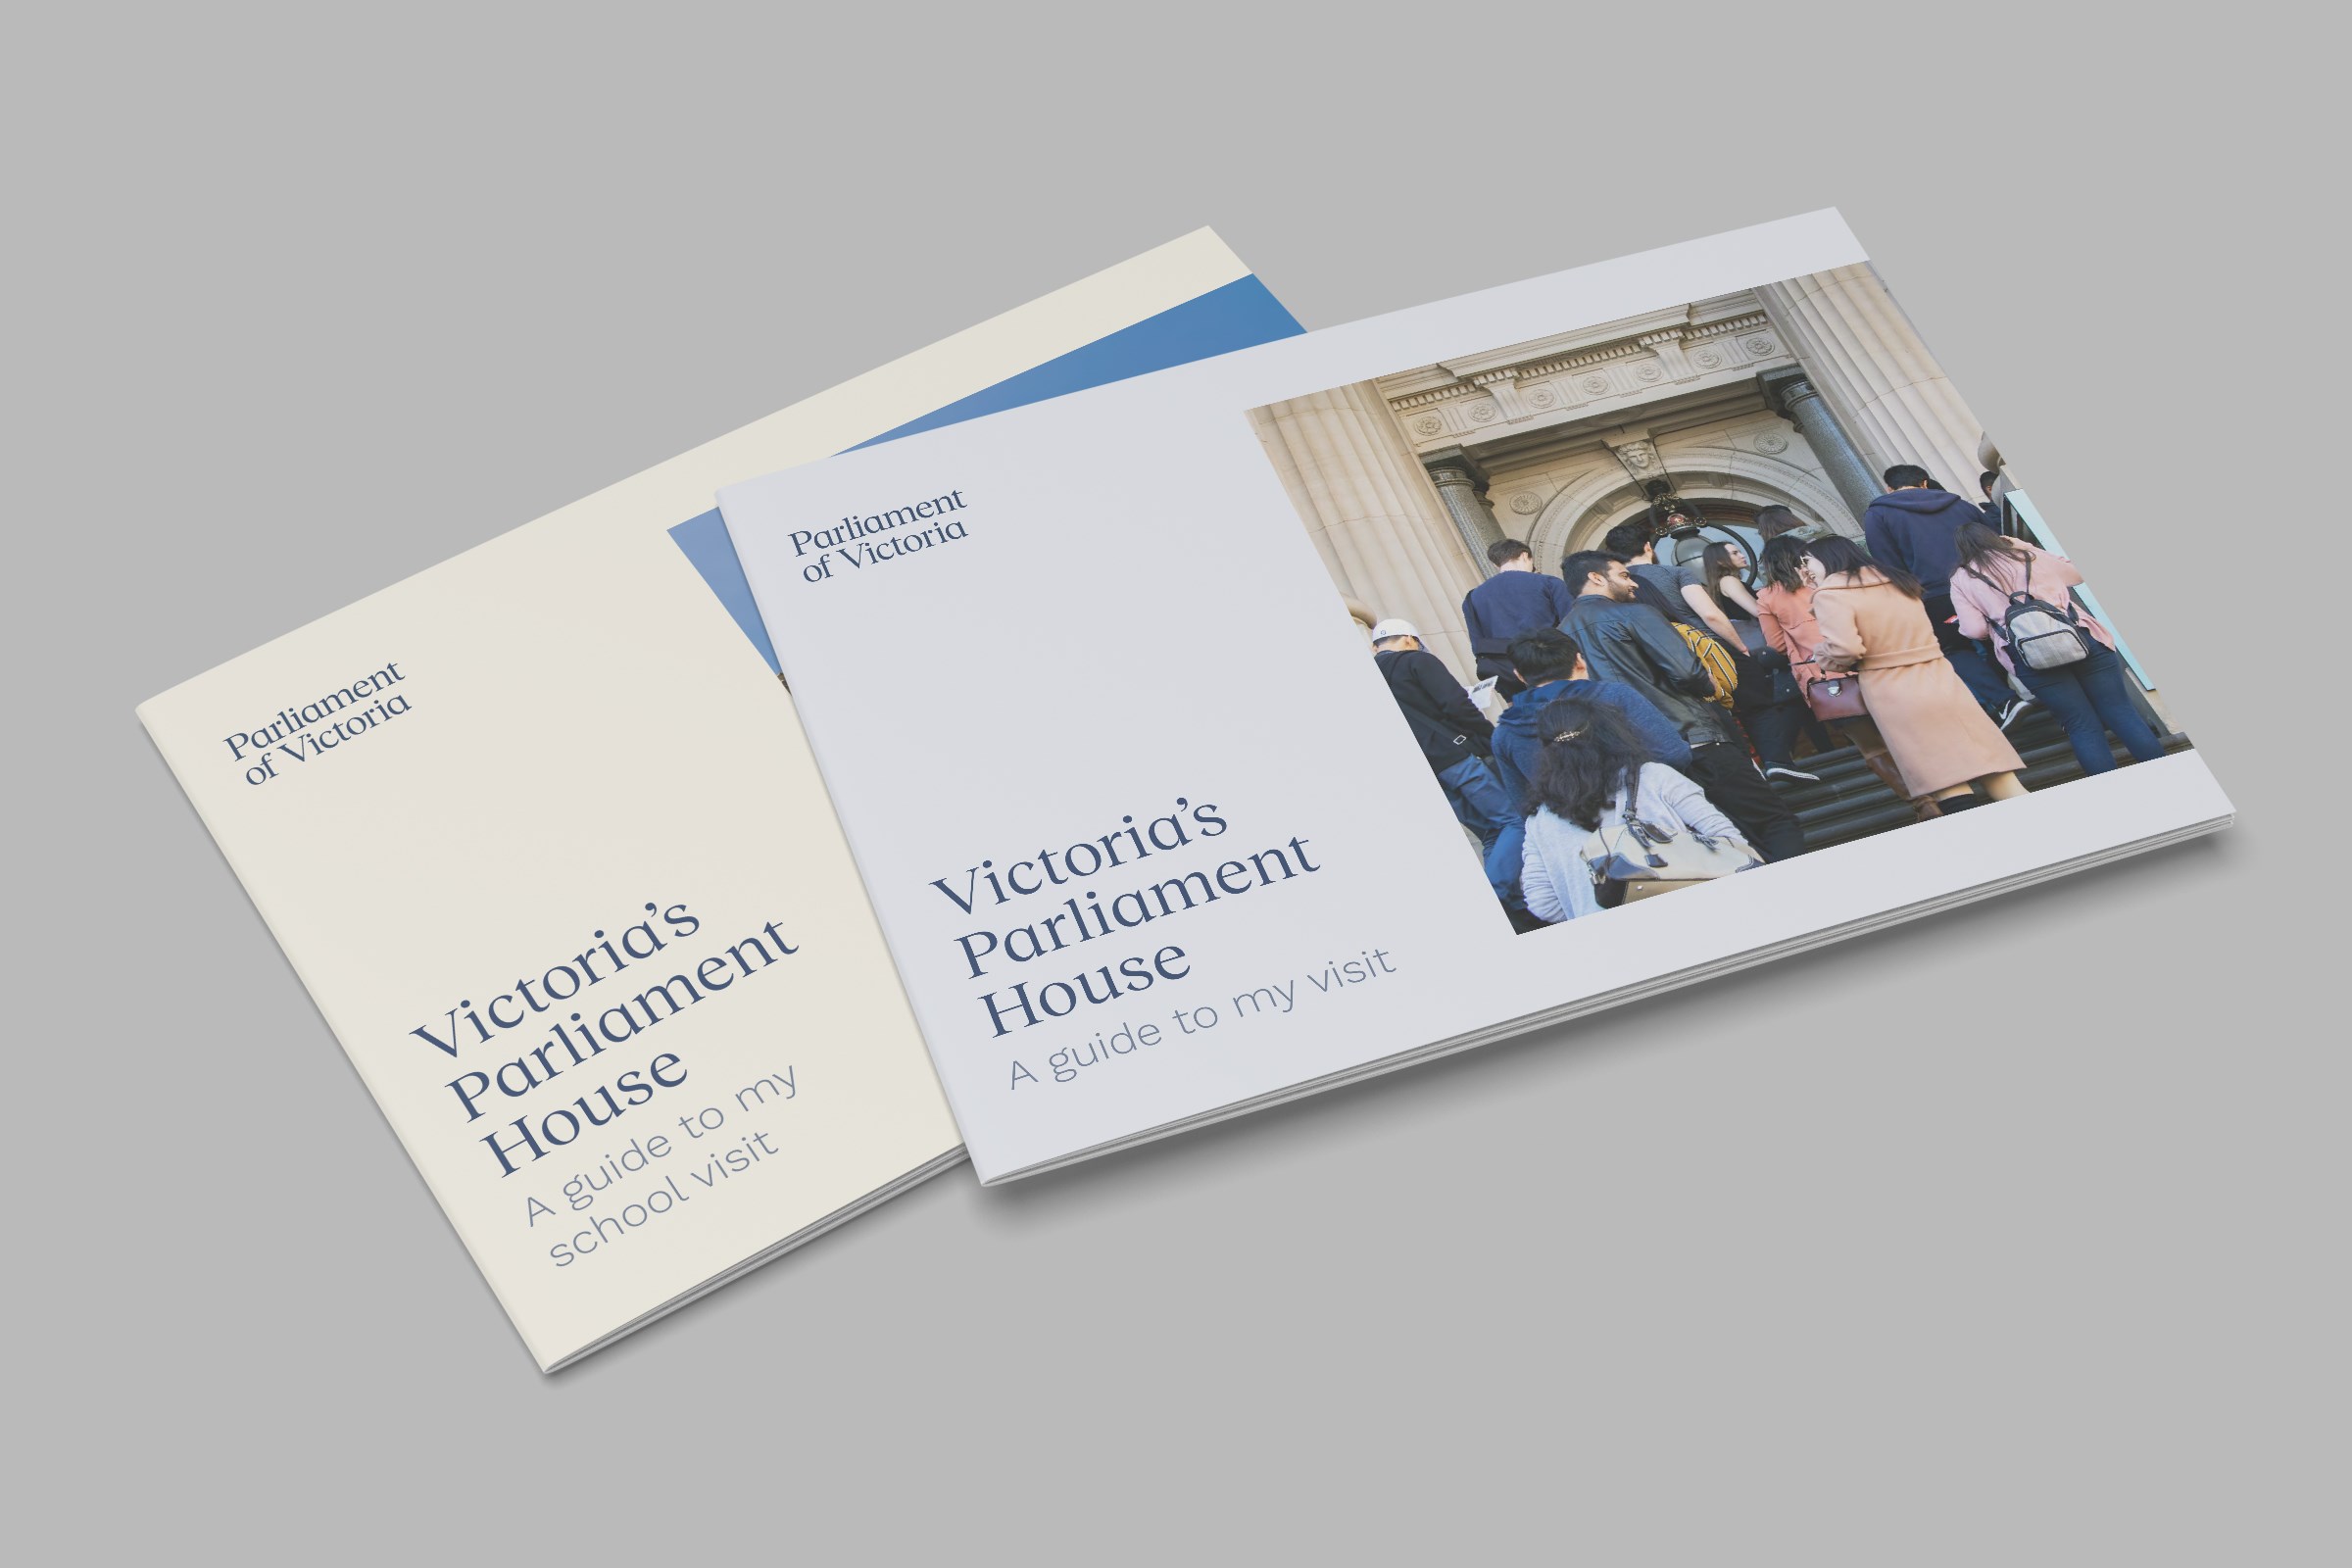 Social stories: Victoria's Parliament House 